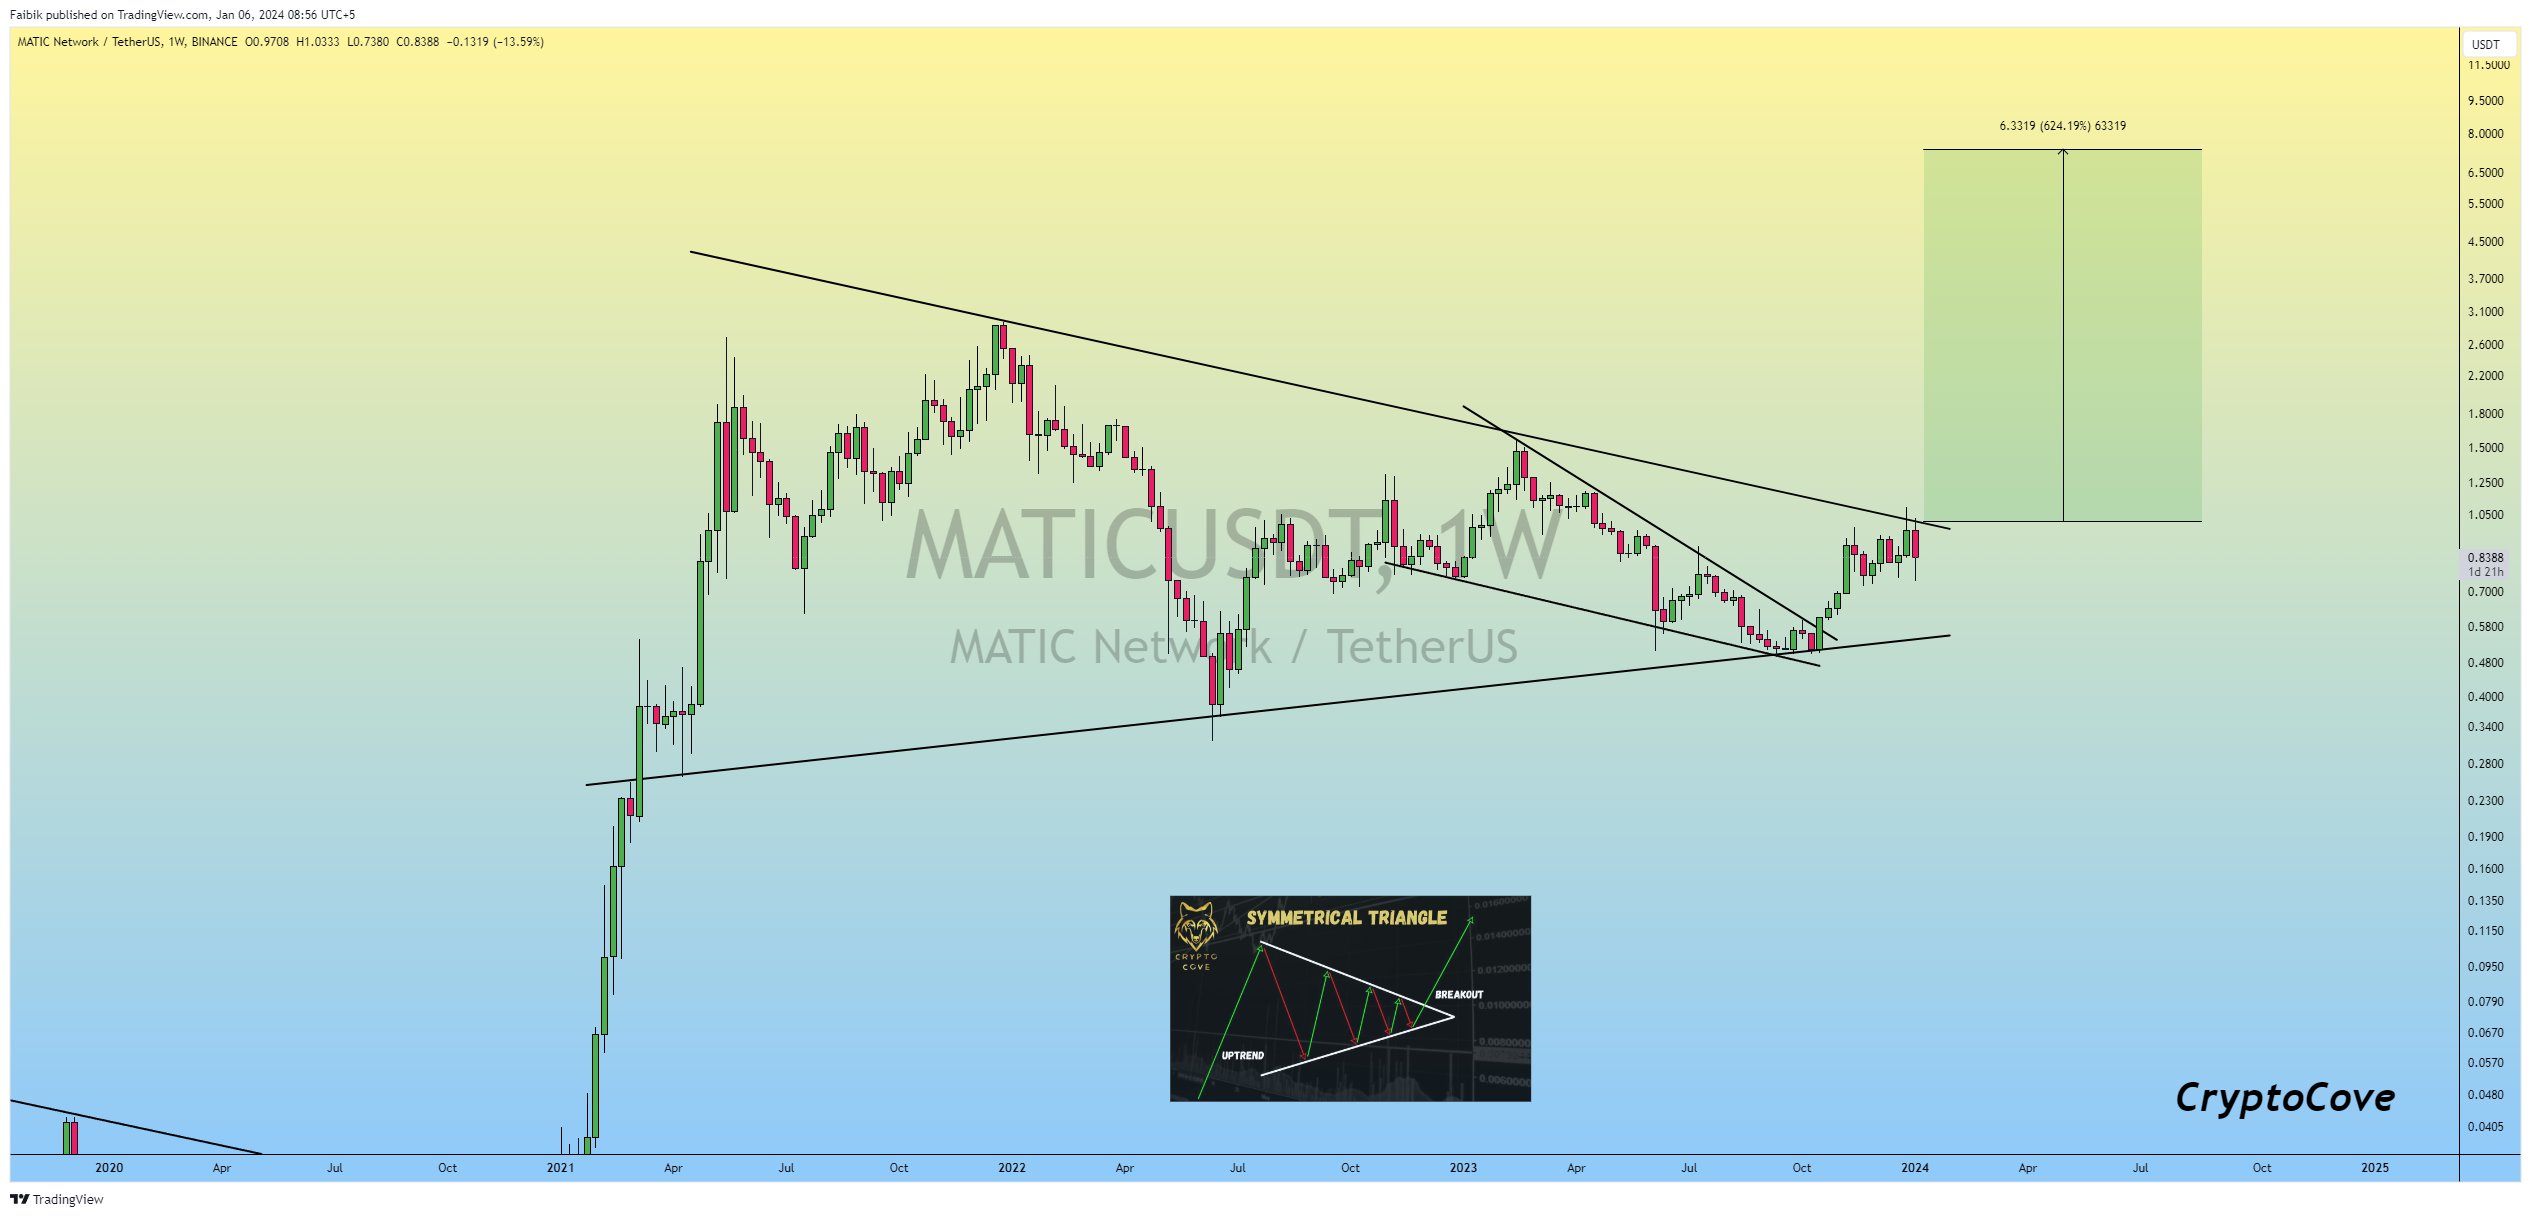 Polygon (MATIC) Price Movement